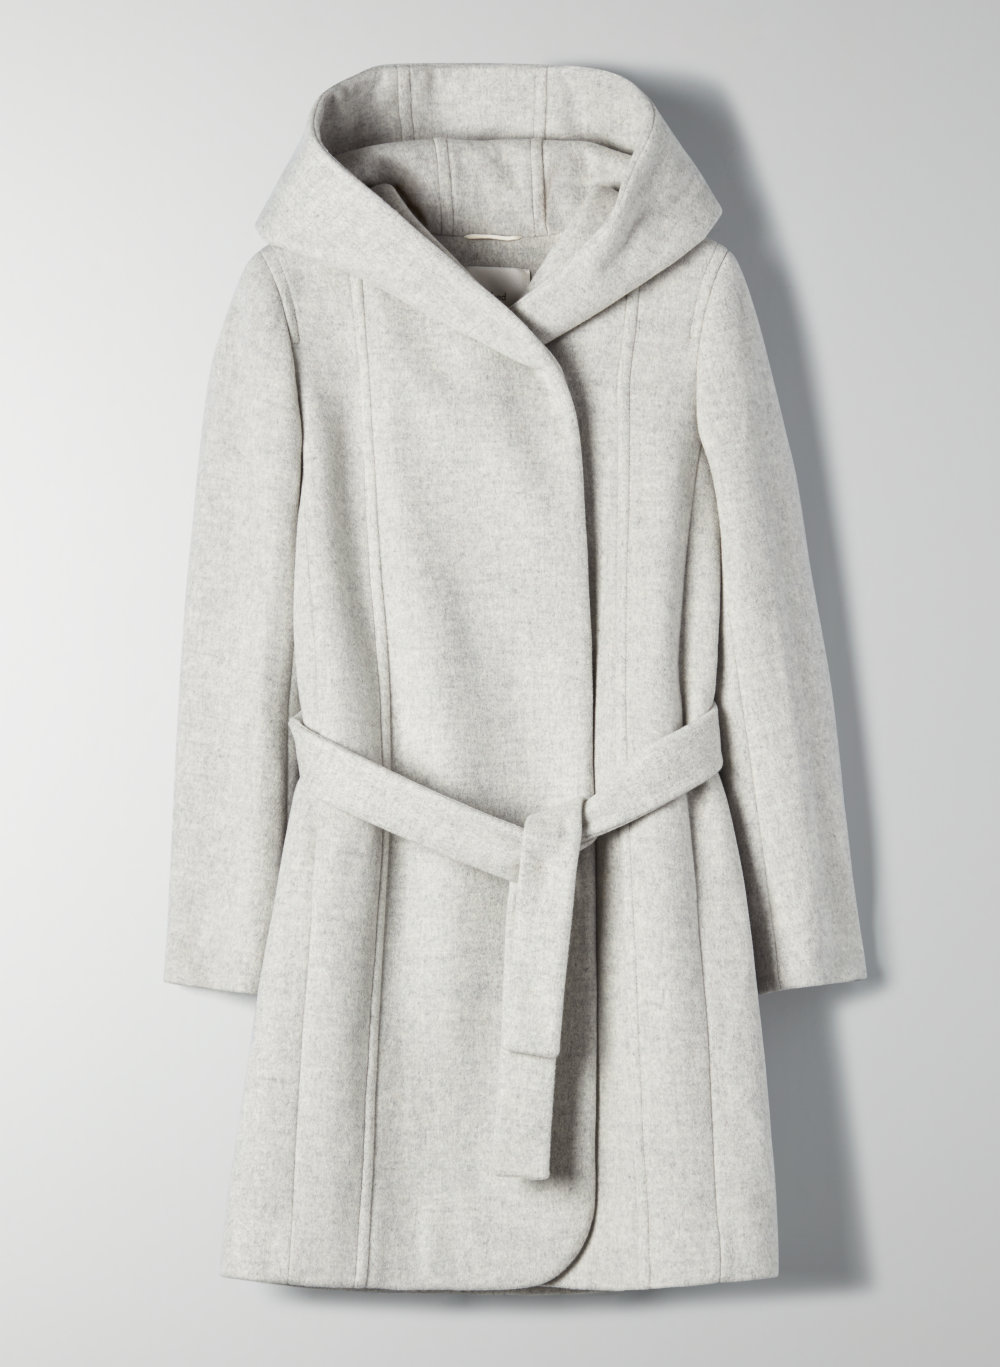 grey wool coat with hood